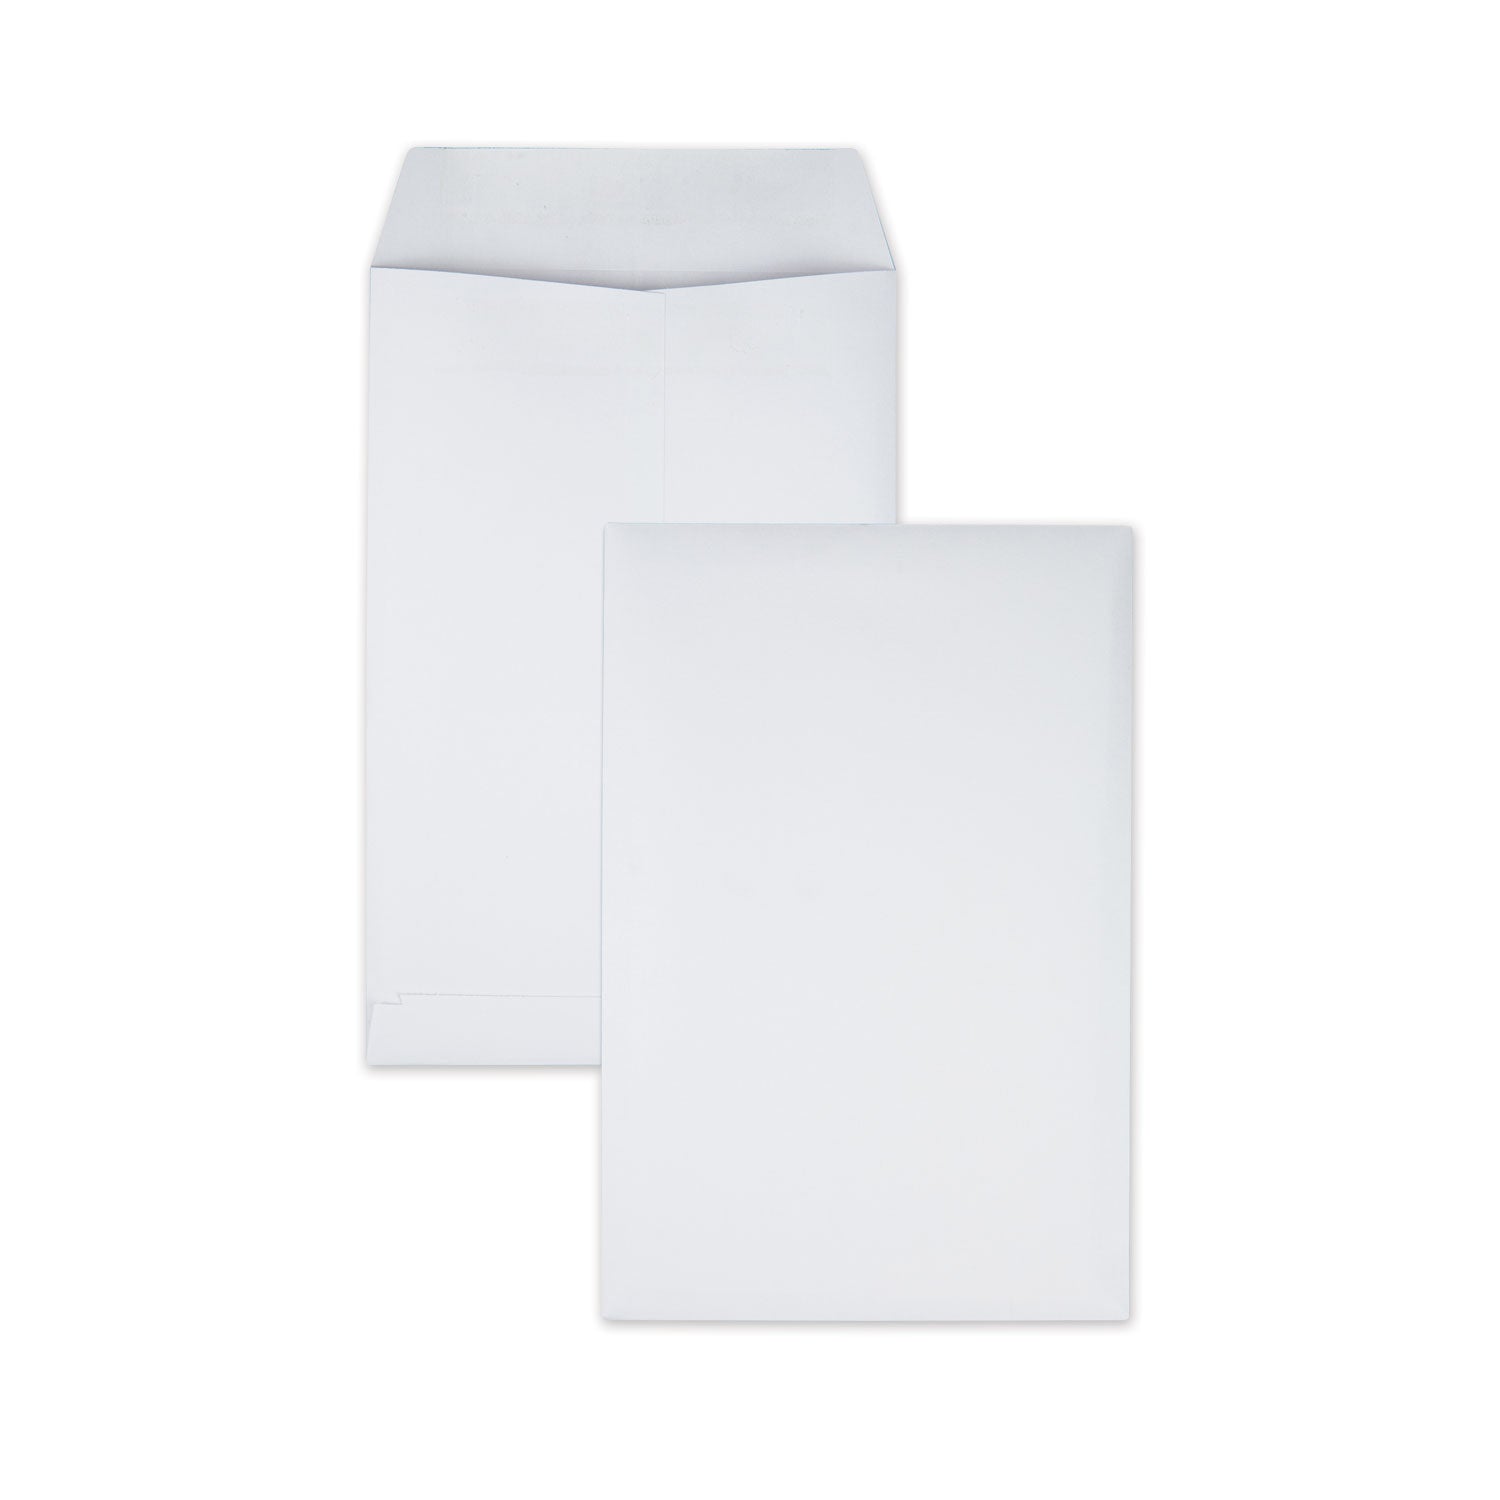 Redi-Seal Catalog Envelope, #1, Cheese Blade Flap, Redi-Seal Adhesive Closure, 6 x 9, White, 100/Box - 